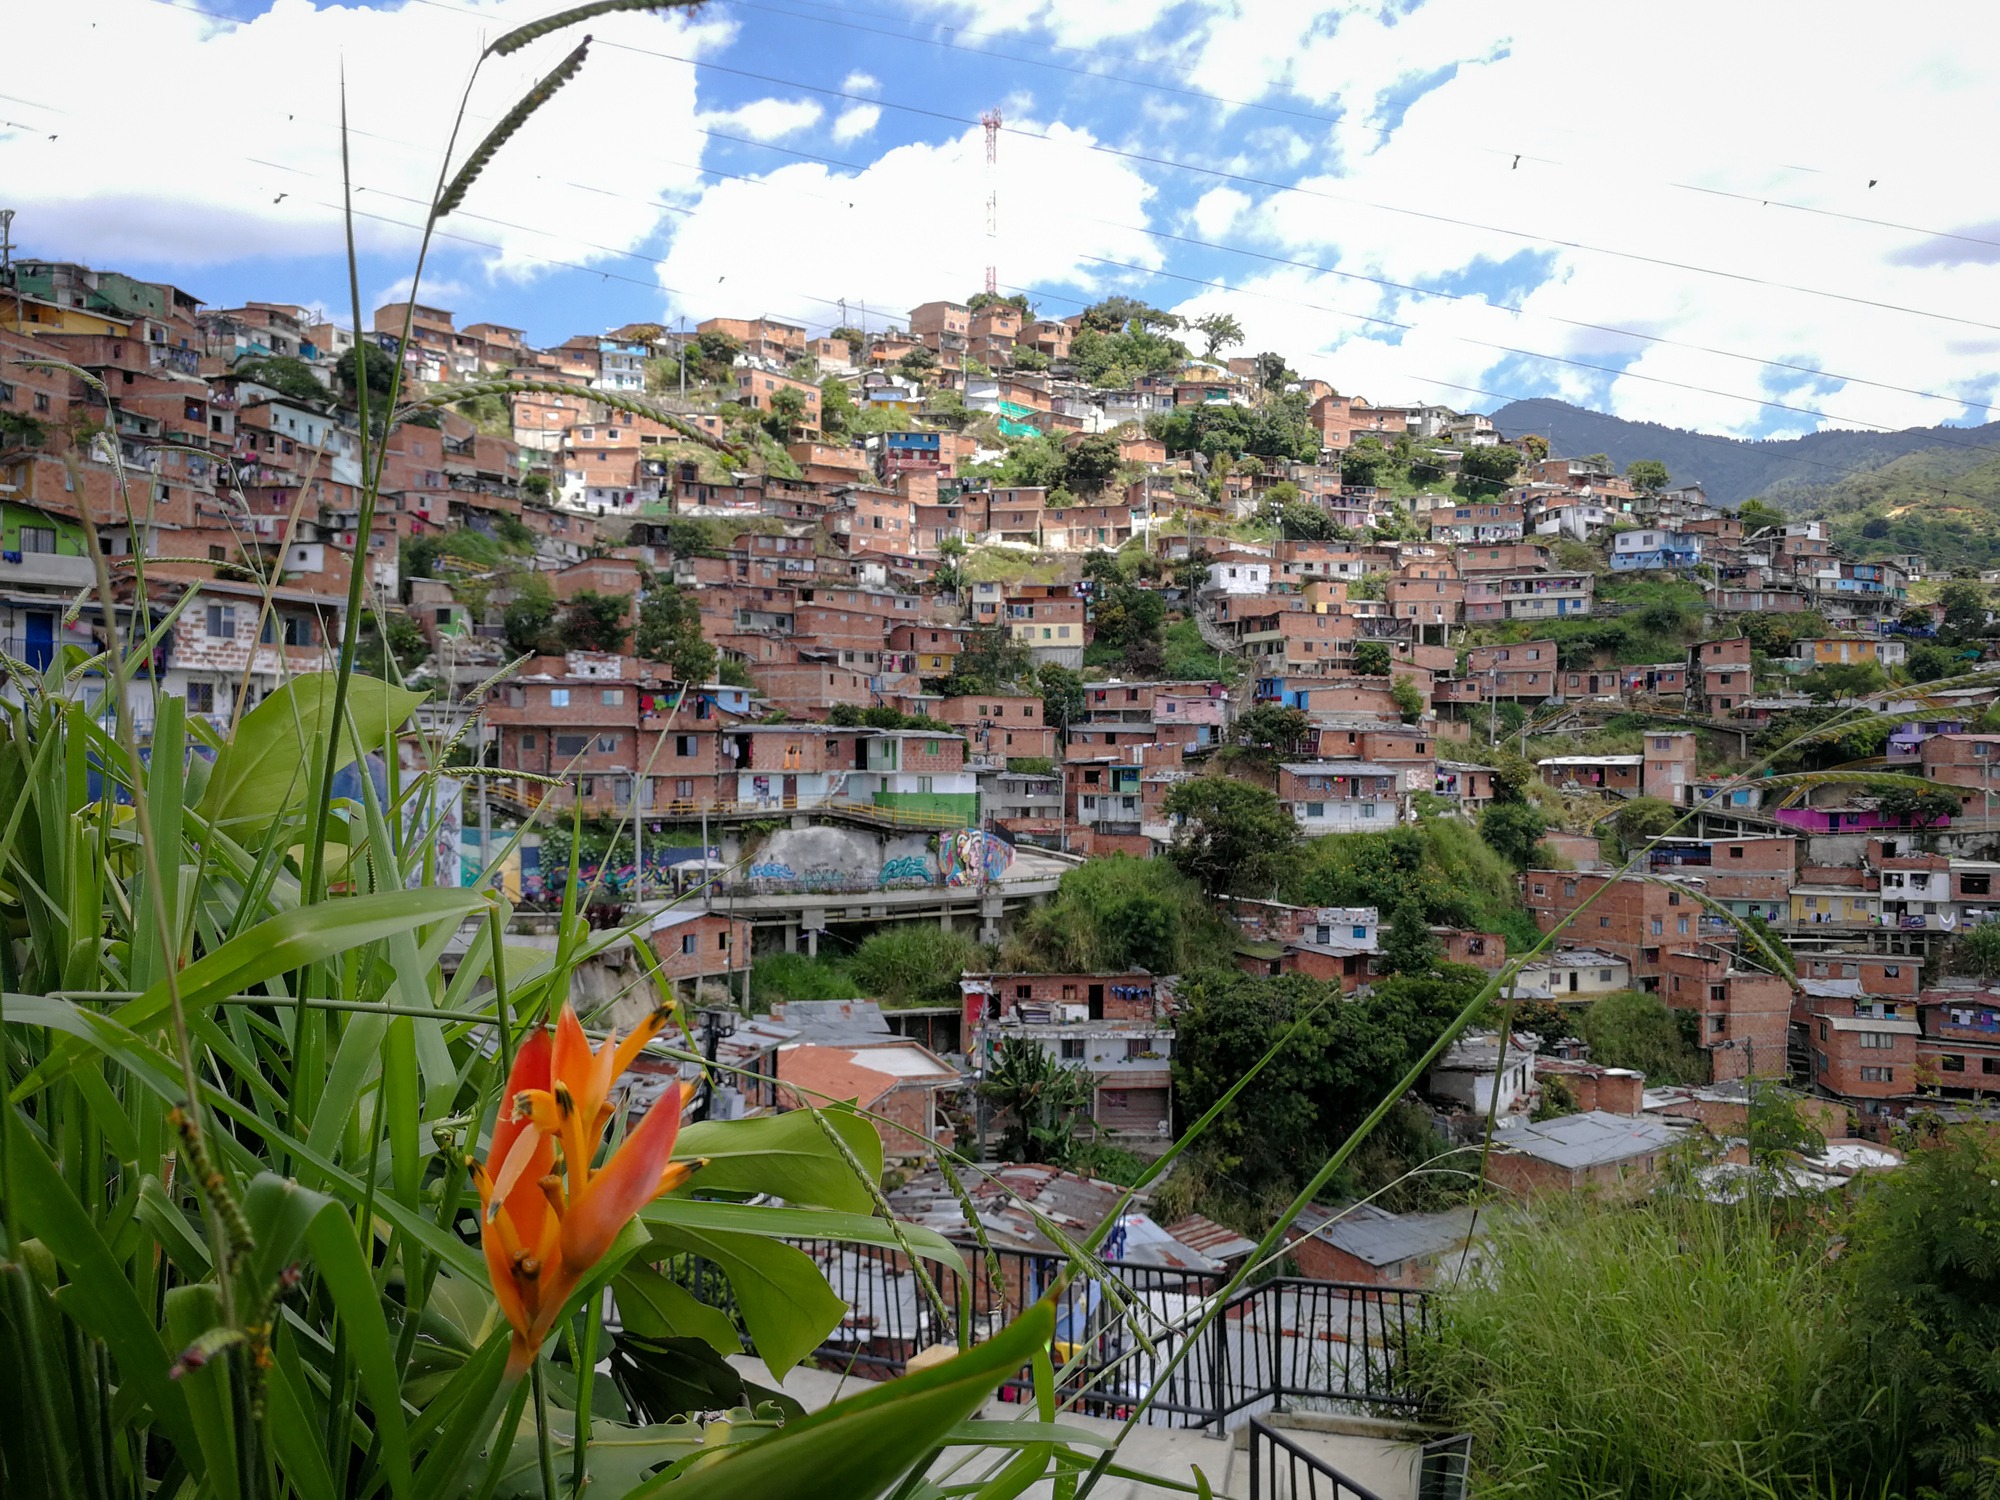 the slums of Comuna 13 in Colombia